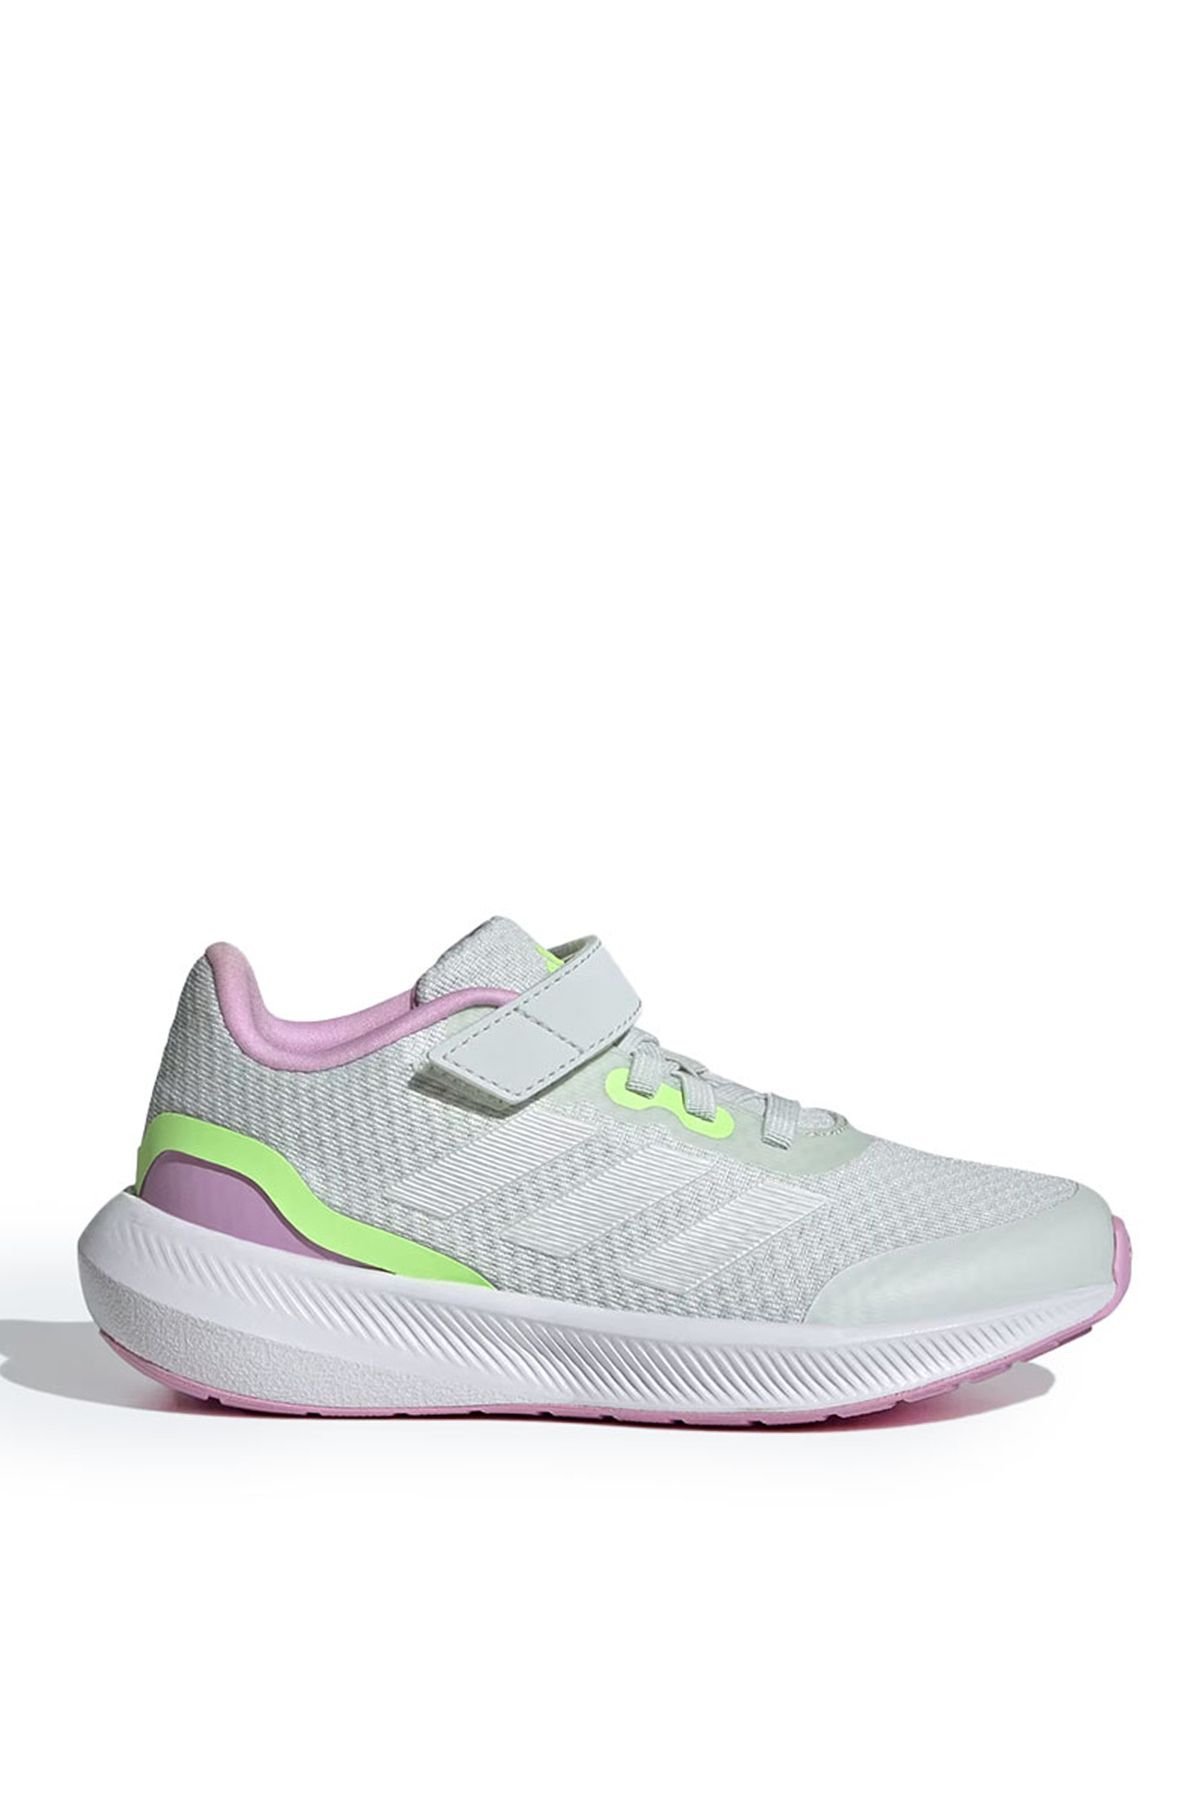 adidas Yeşil Kadın Yürüyüş Ayakkabısı ID0597-RUNFALCON 3.0 EL K